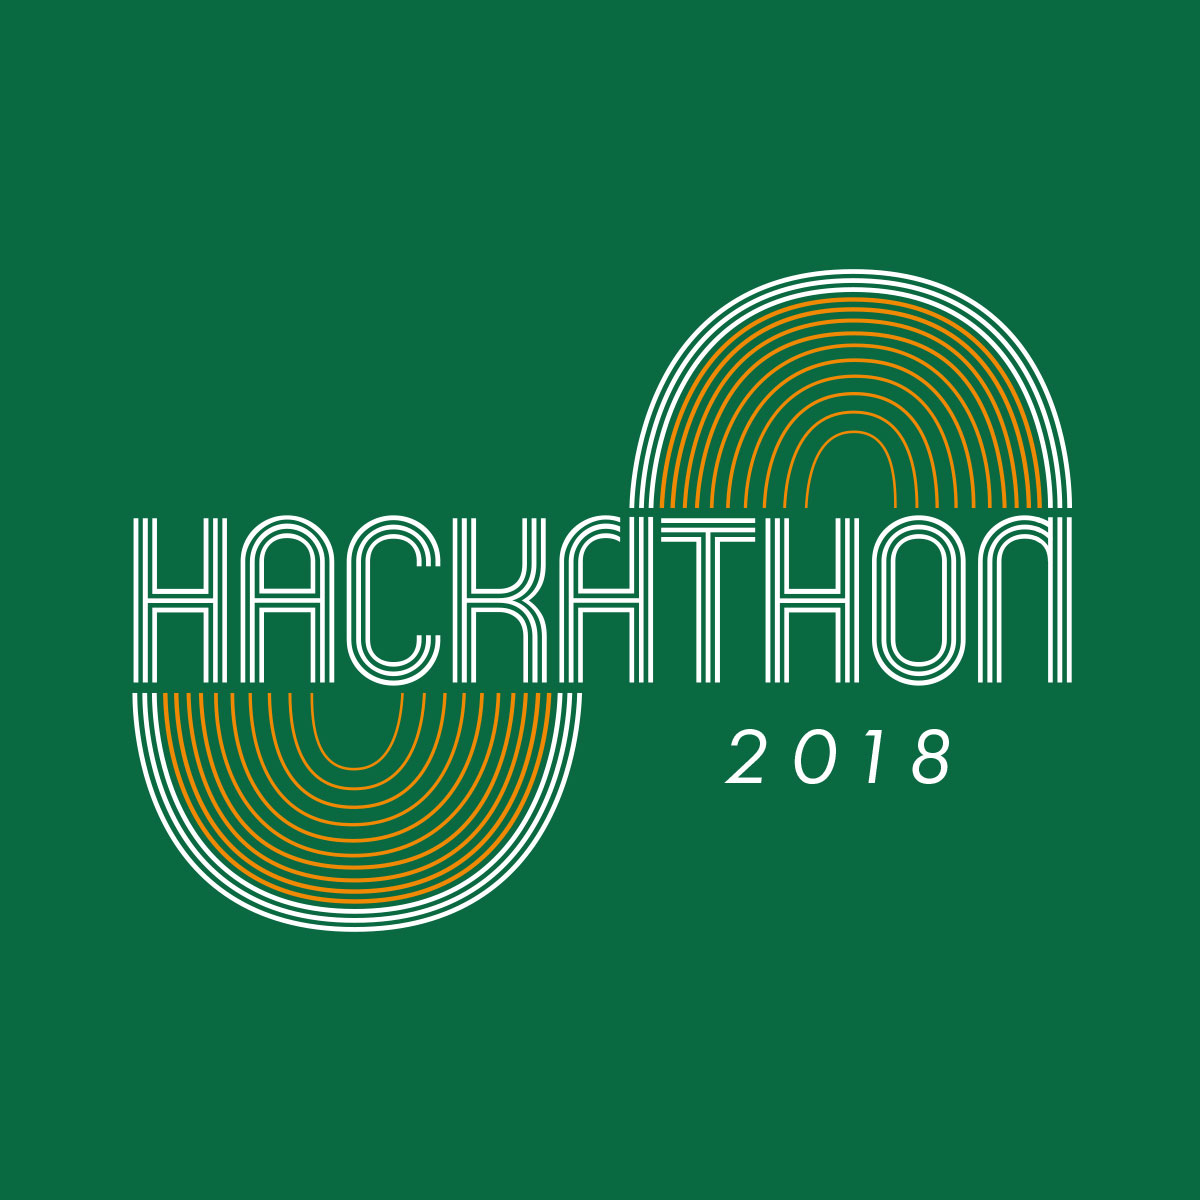 Oracle Data Cloud – Hackathon 2018 Green Retro T-Shirt Design